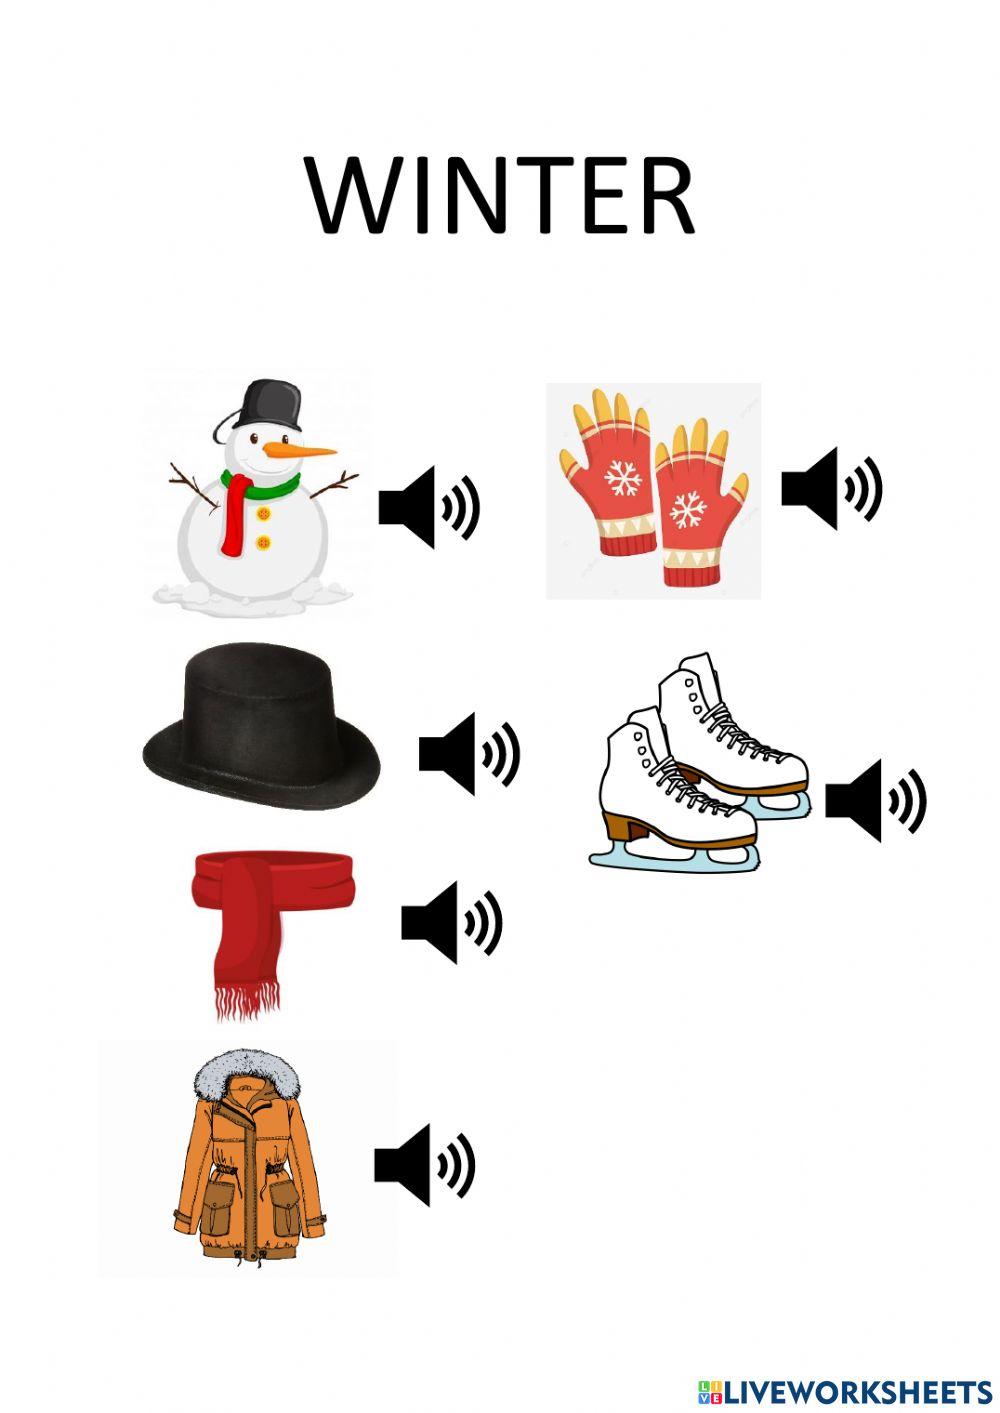 Winter vocabulary